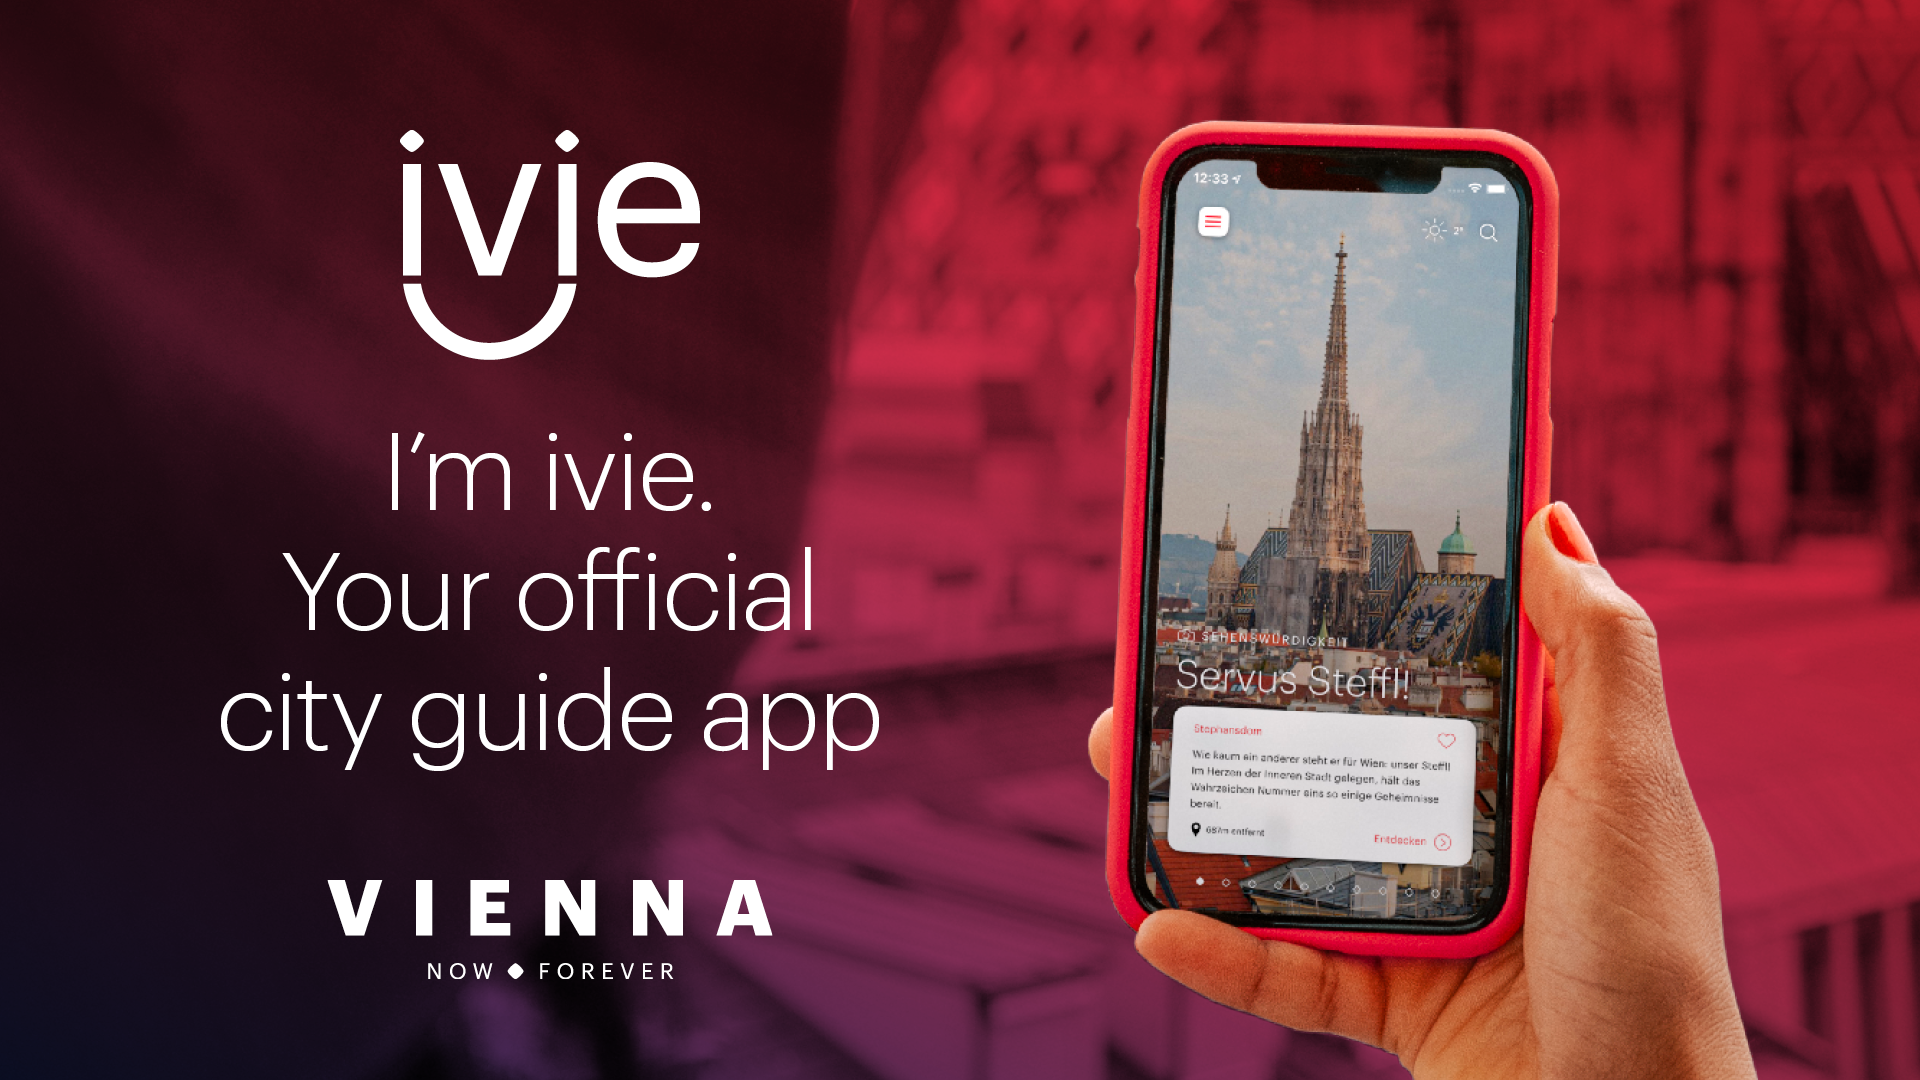 ivie City Guide App Features